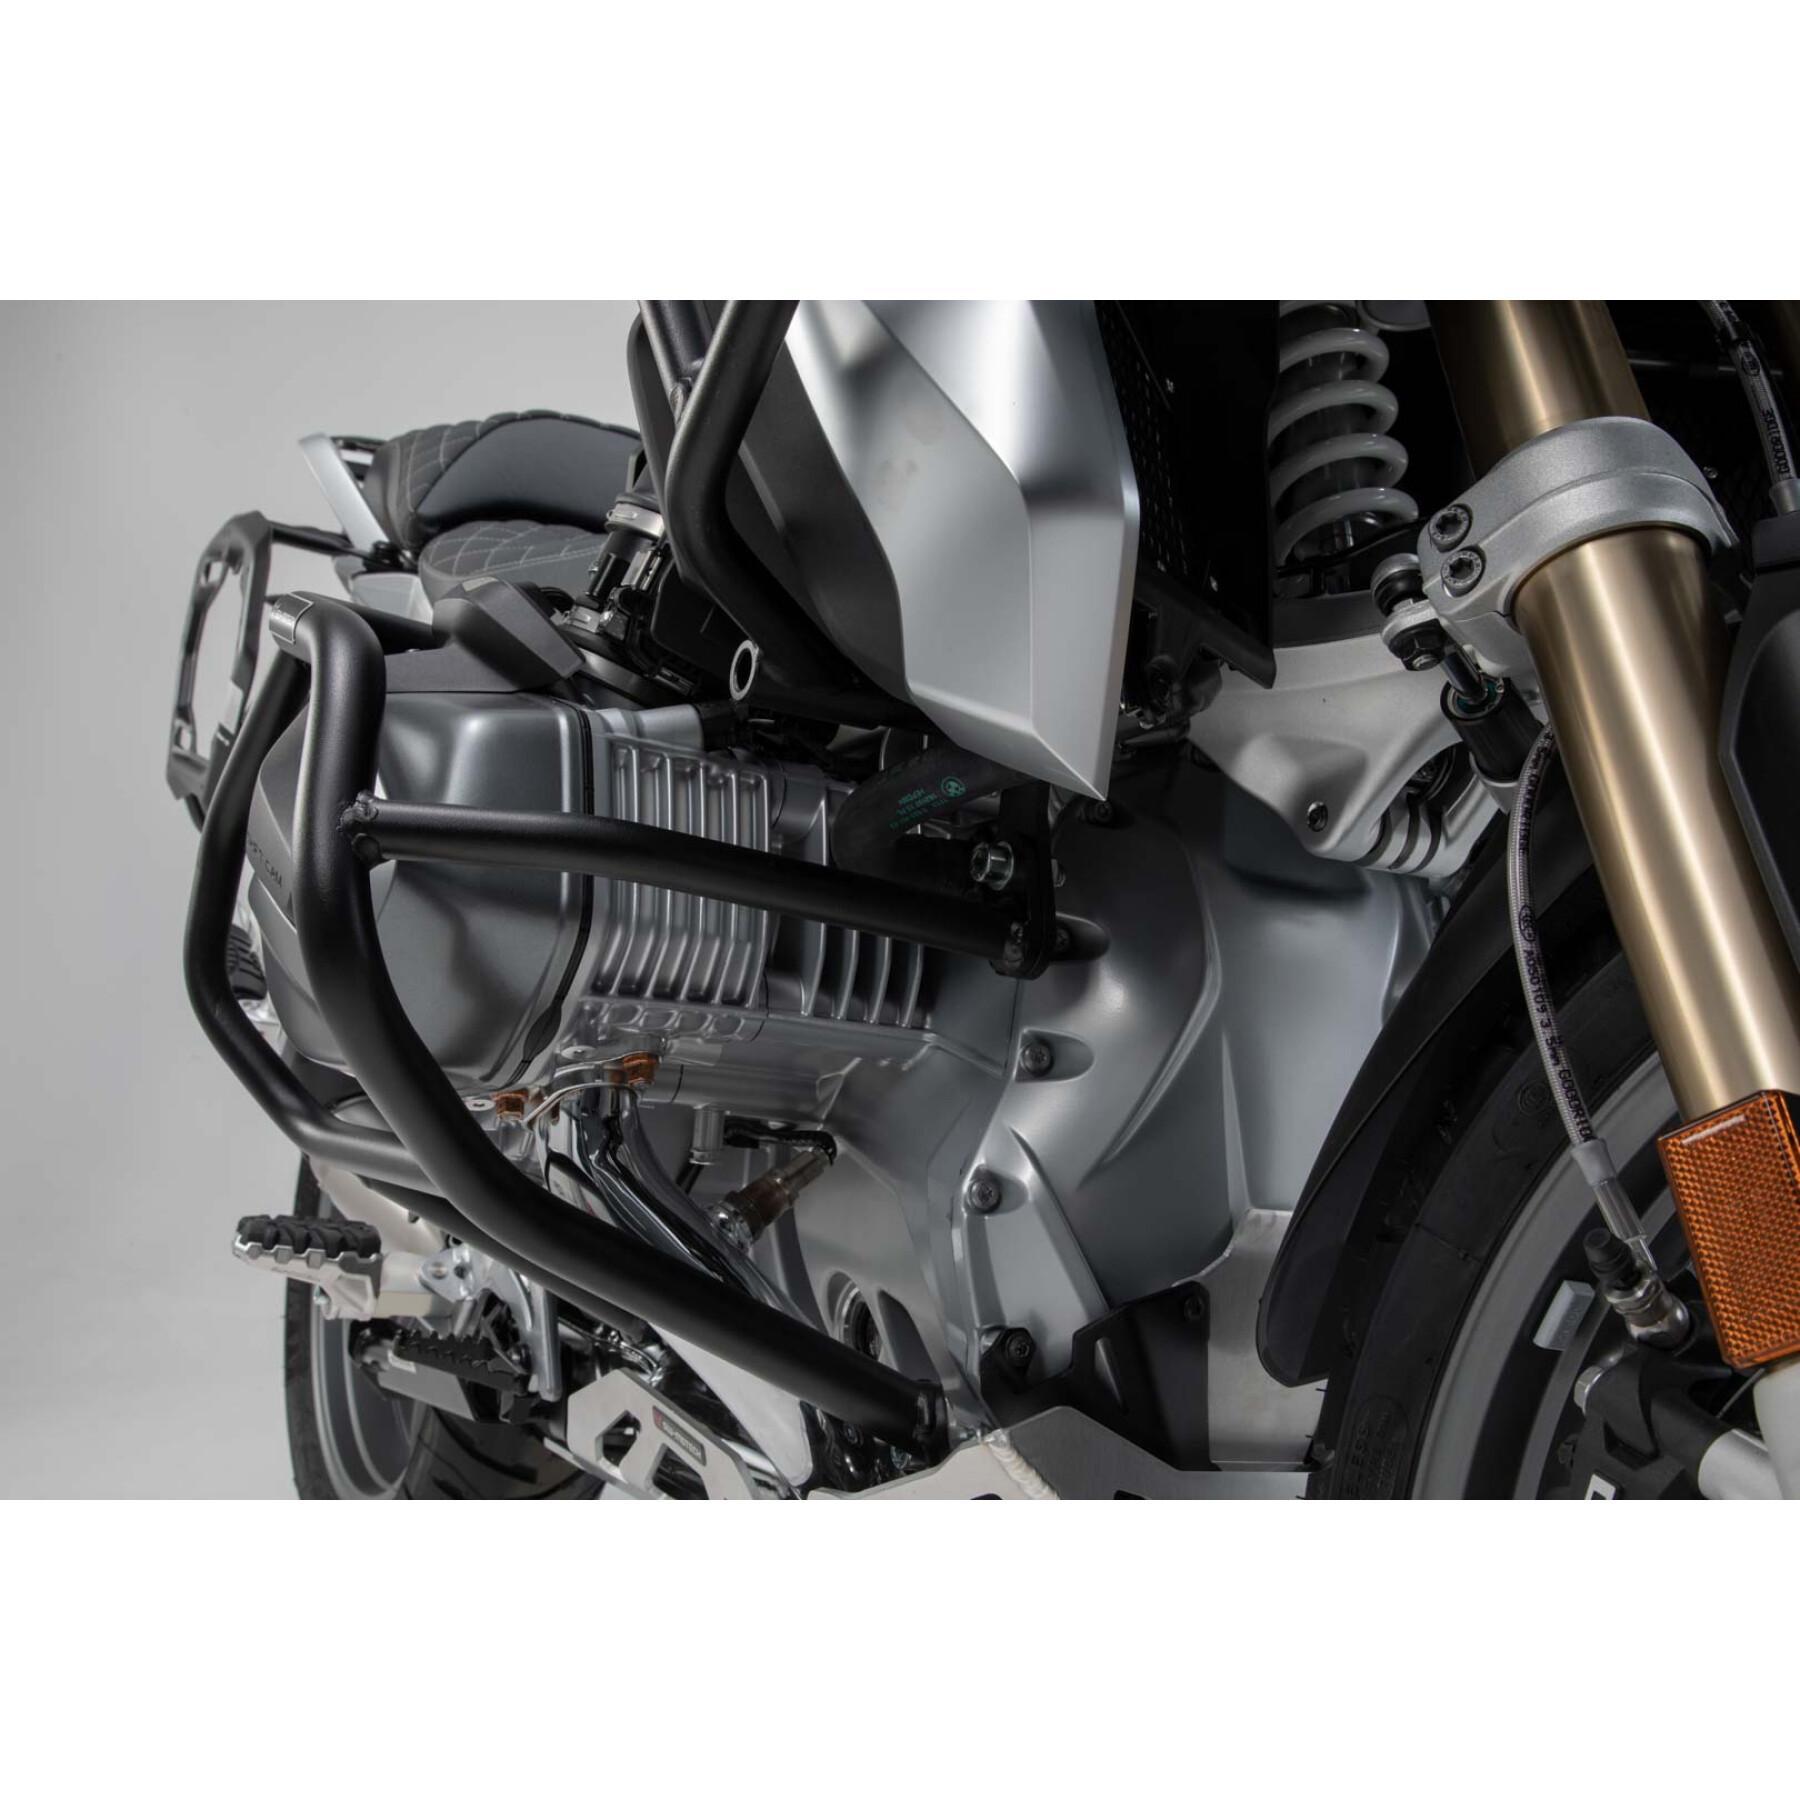 Protezioni per moto Sw-Motech Crashbar Bmw R 1250 Gs (18-), R1250 R/Rs (18-)